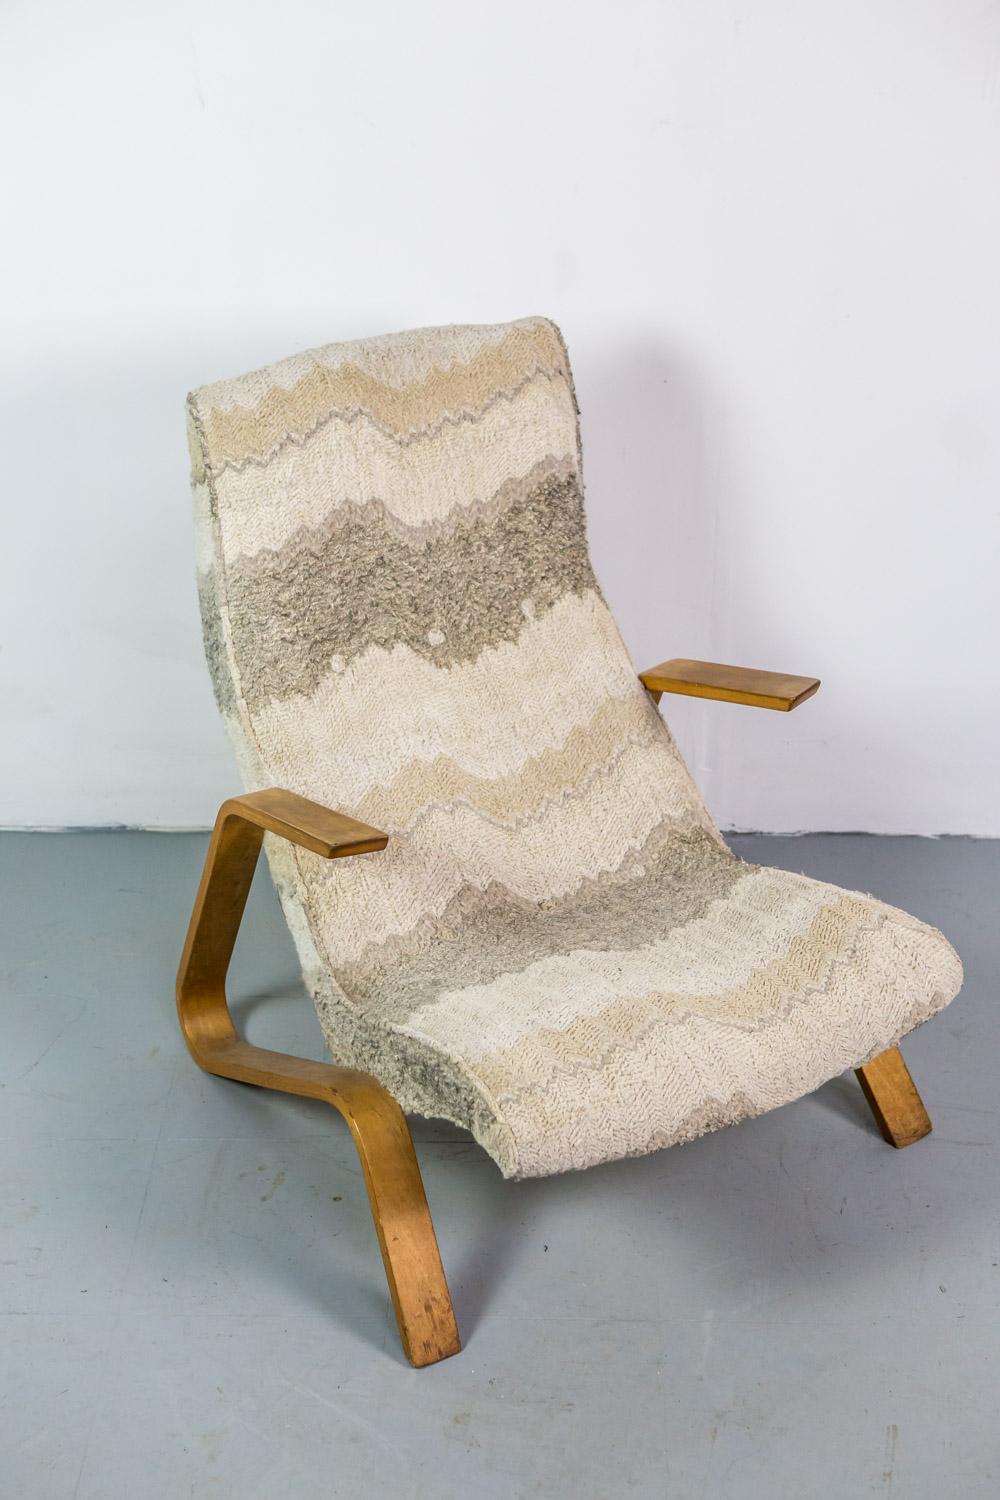 Early Grasshopper Chair by Eero Saarinen for Knoll (amerikanisch)